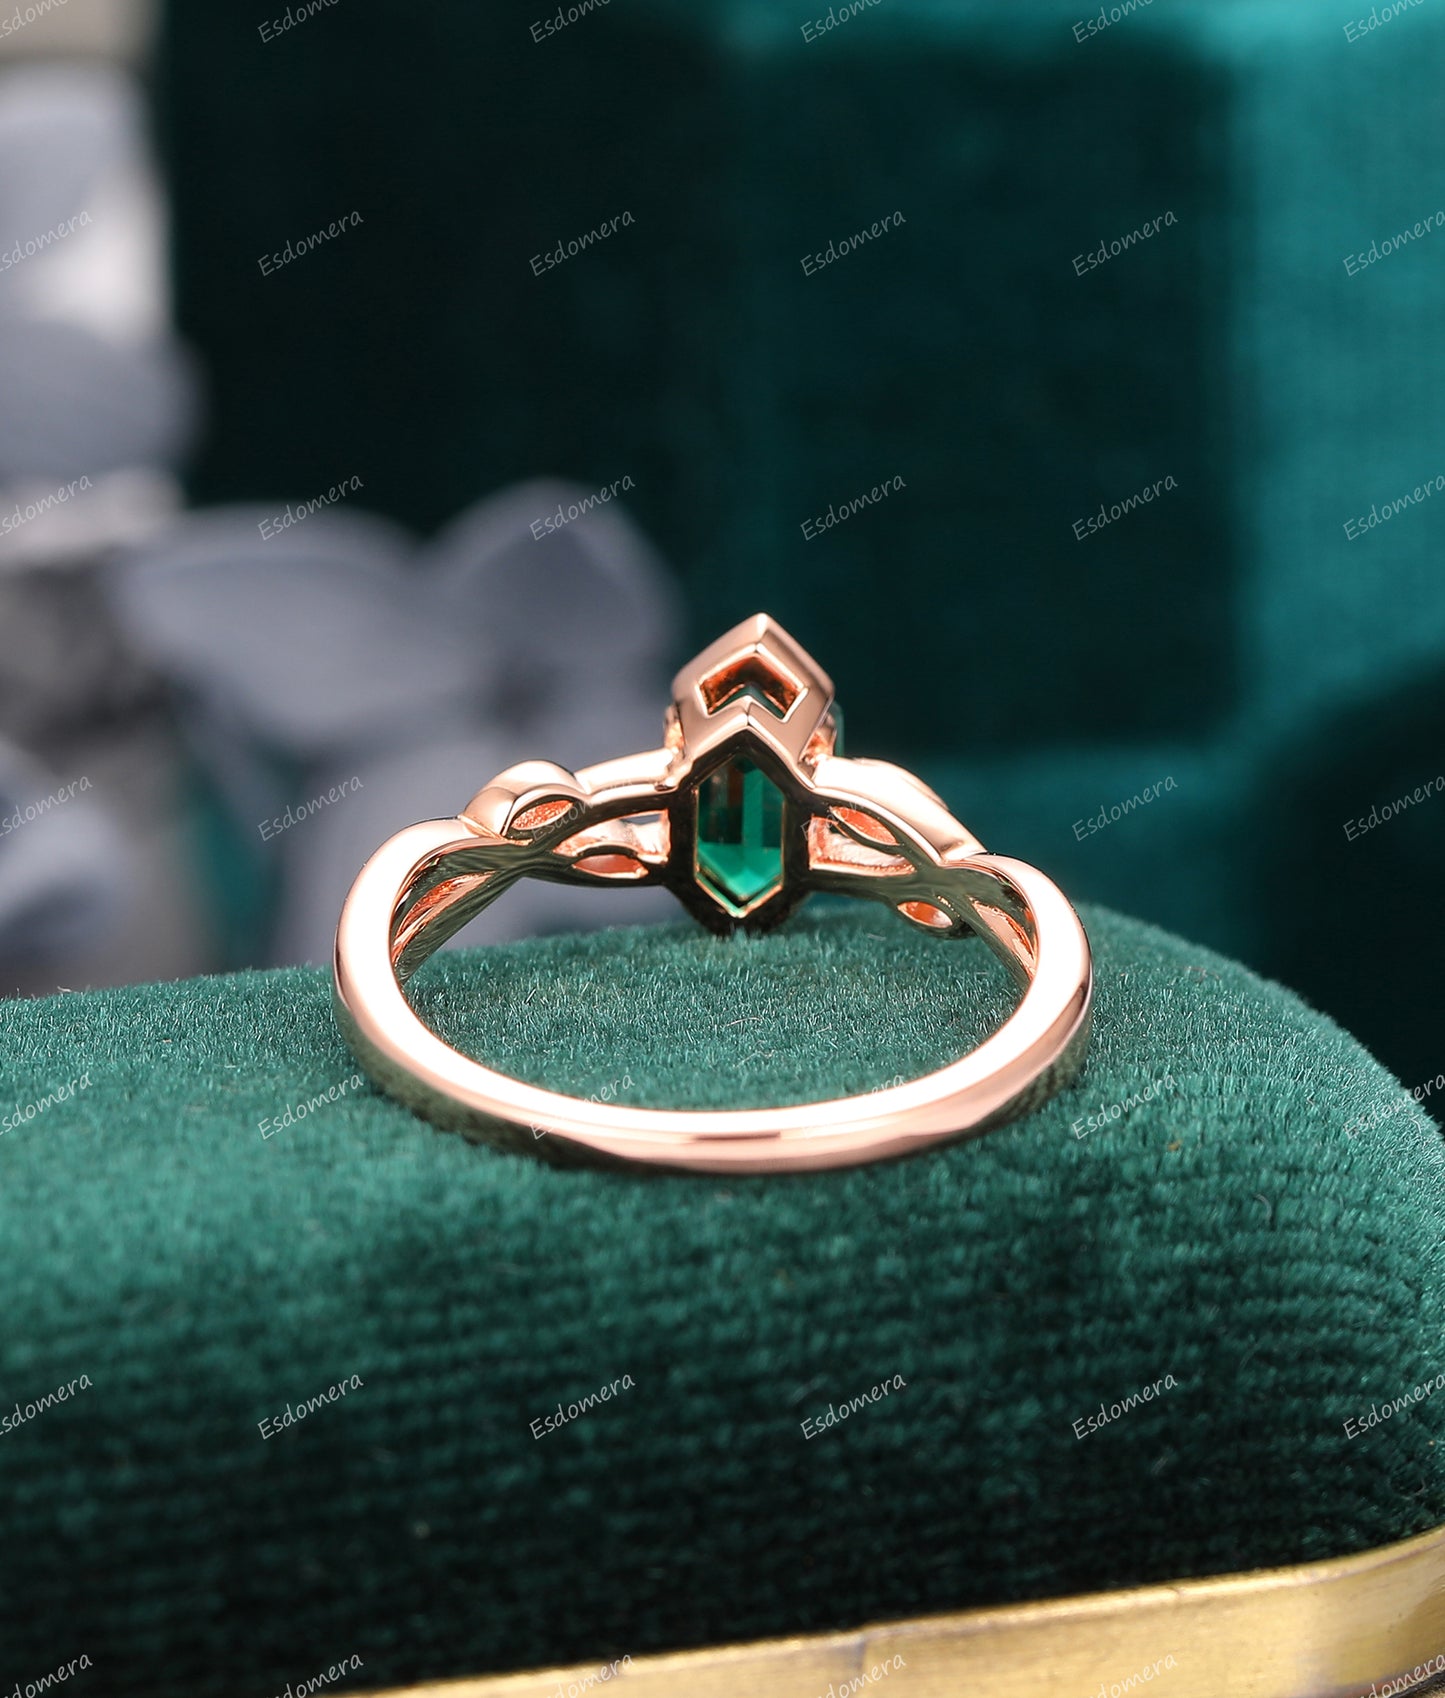 1.1CT Hexagon Cut Emerald Engagement Ring, Leaf Vine Wedding Promise Ring, 14K Rose Gold Cross Band Ring For Women